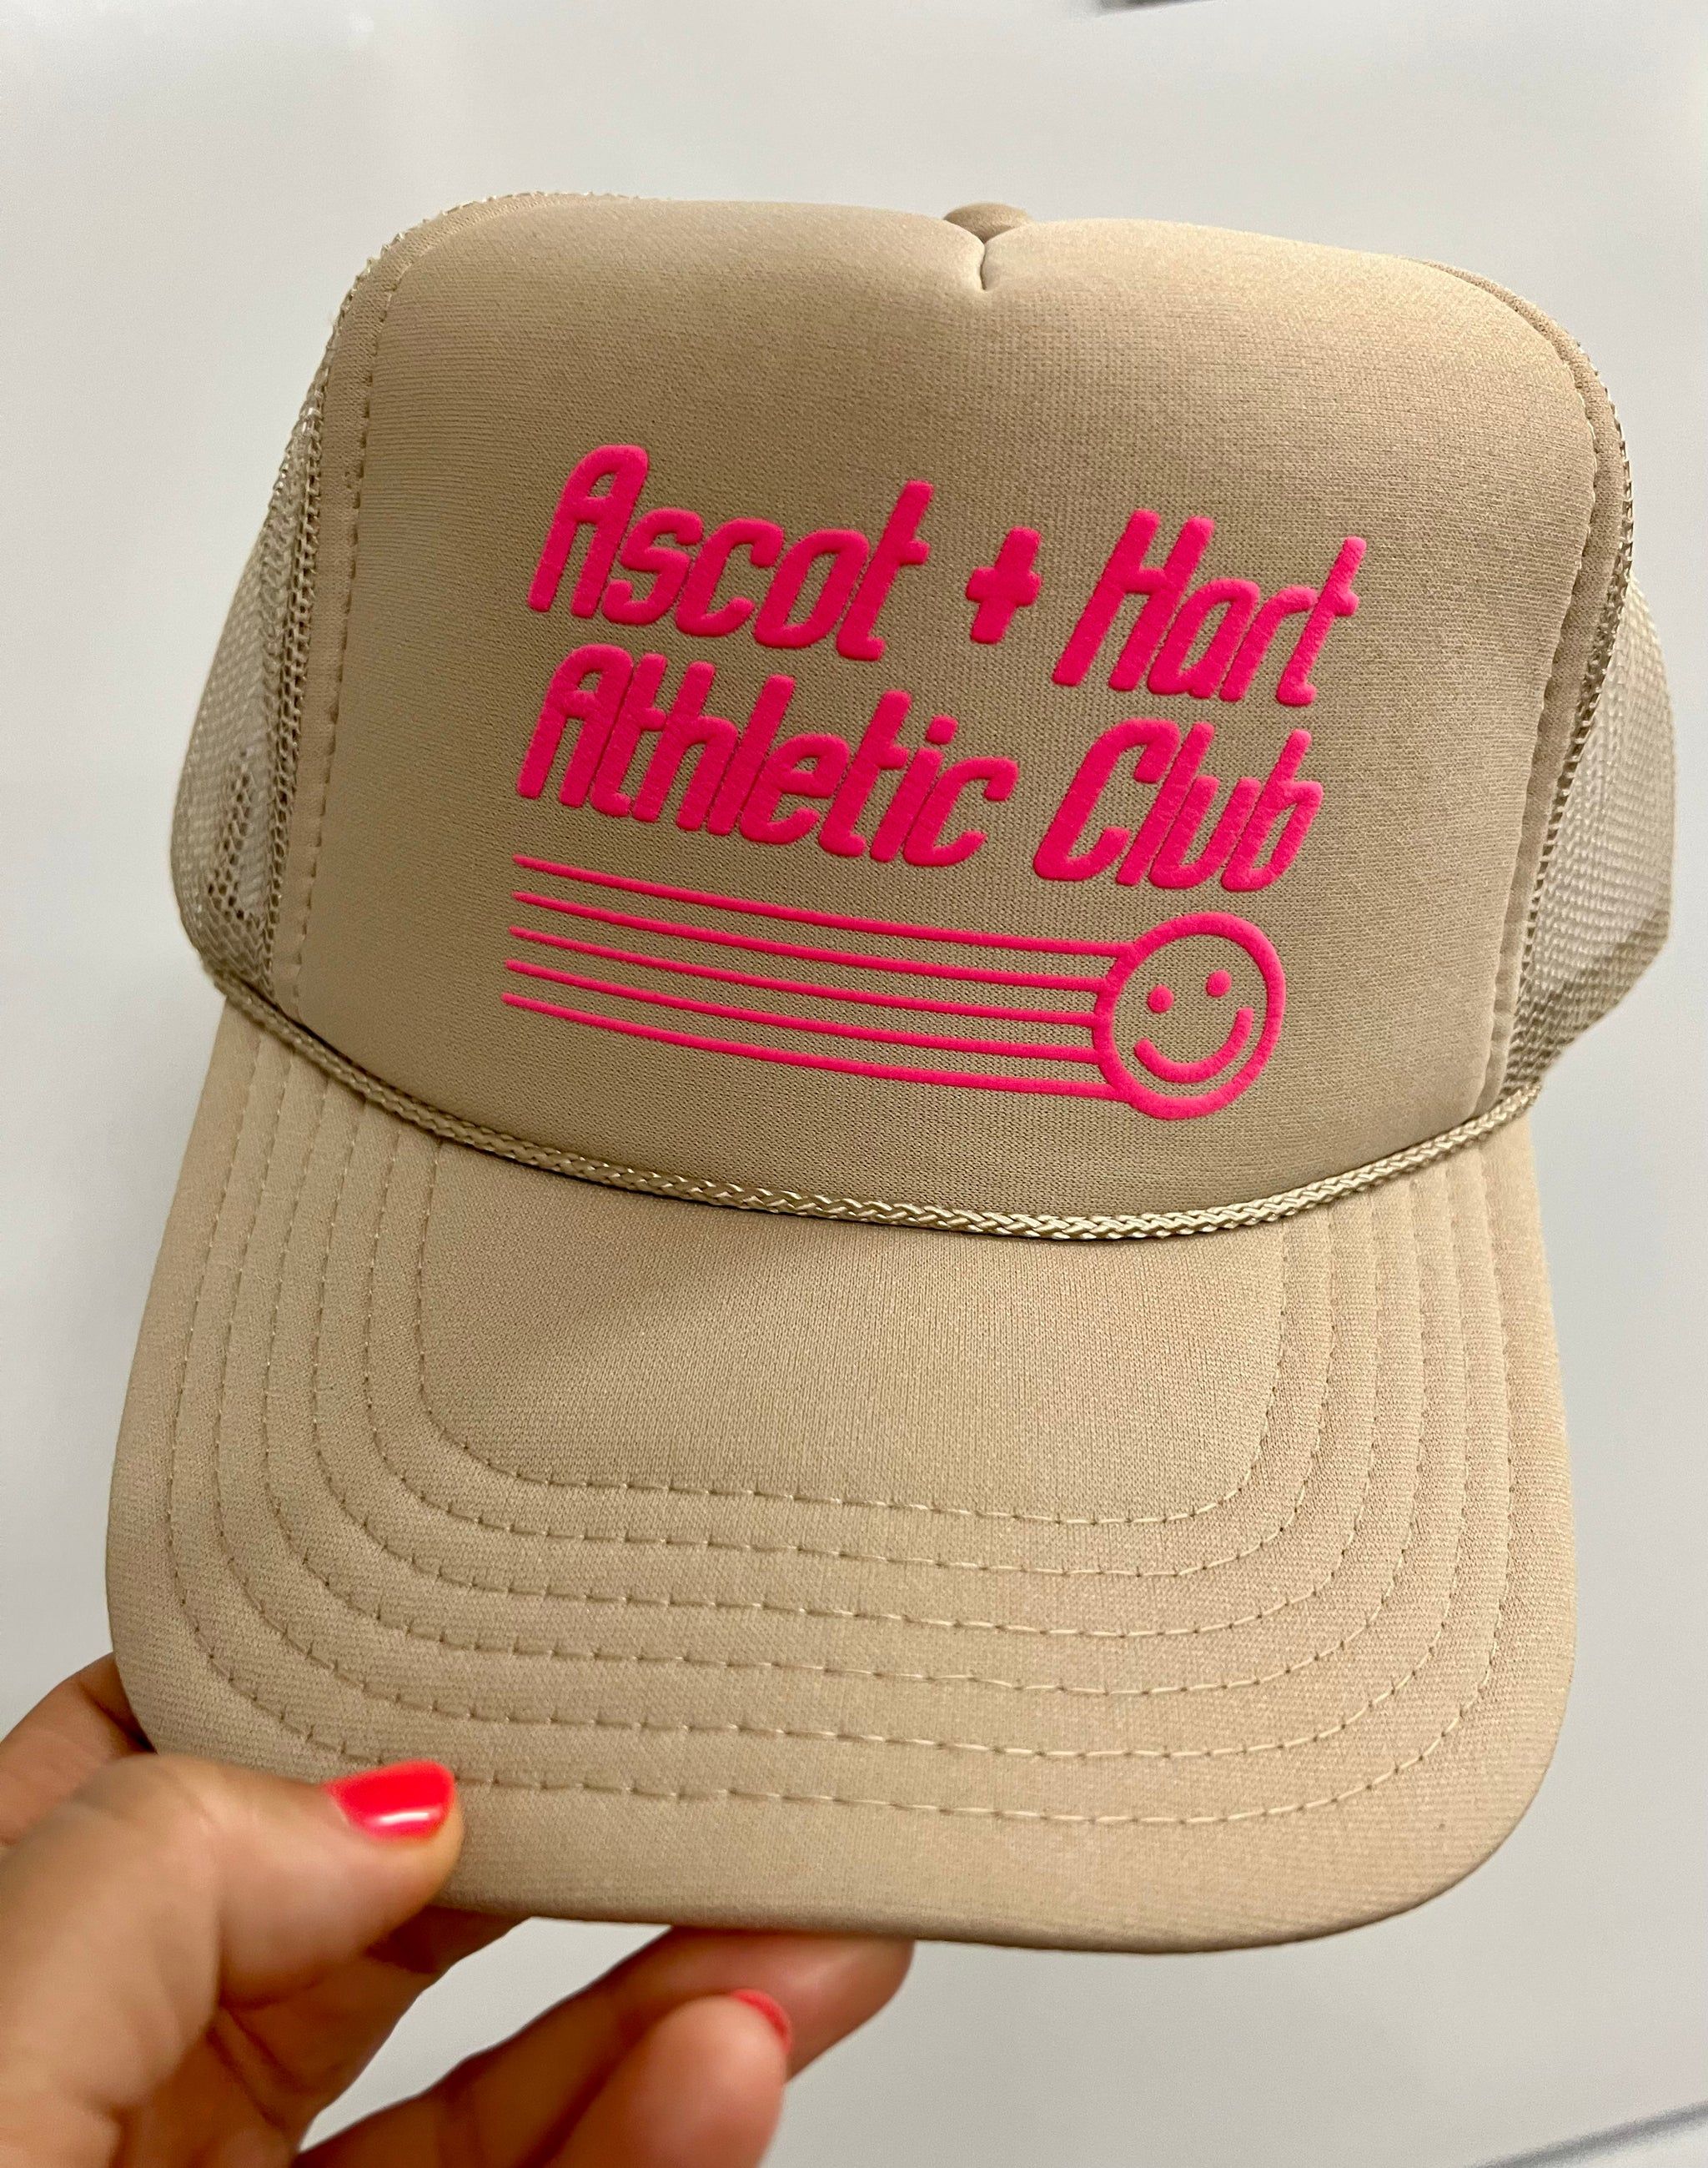 Ascot + Hart Athletic Club Trucker | Ascot + Hart